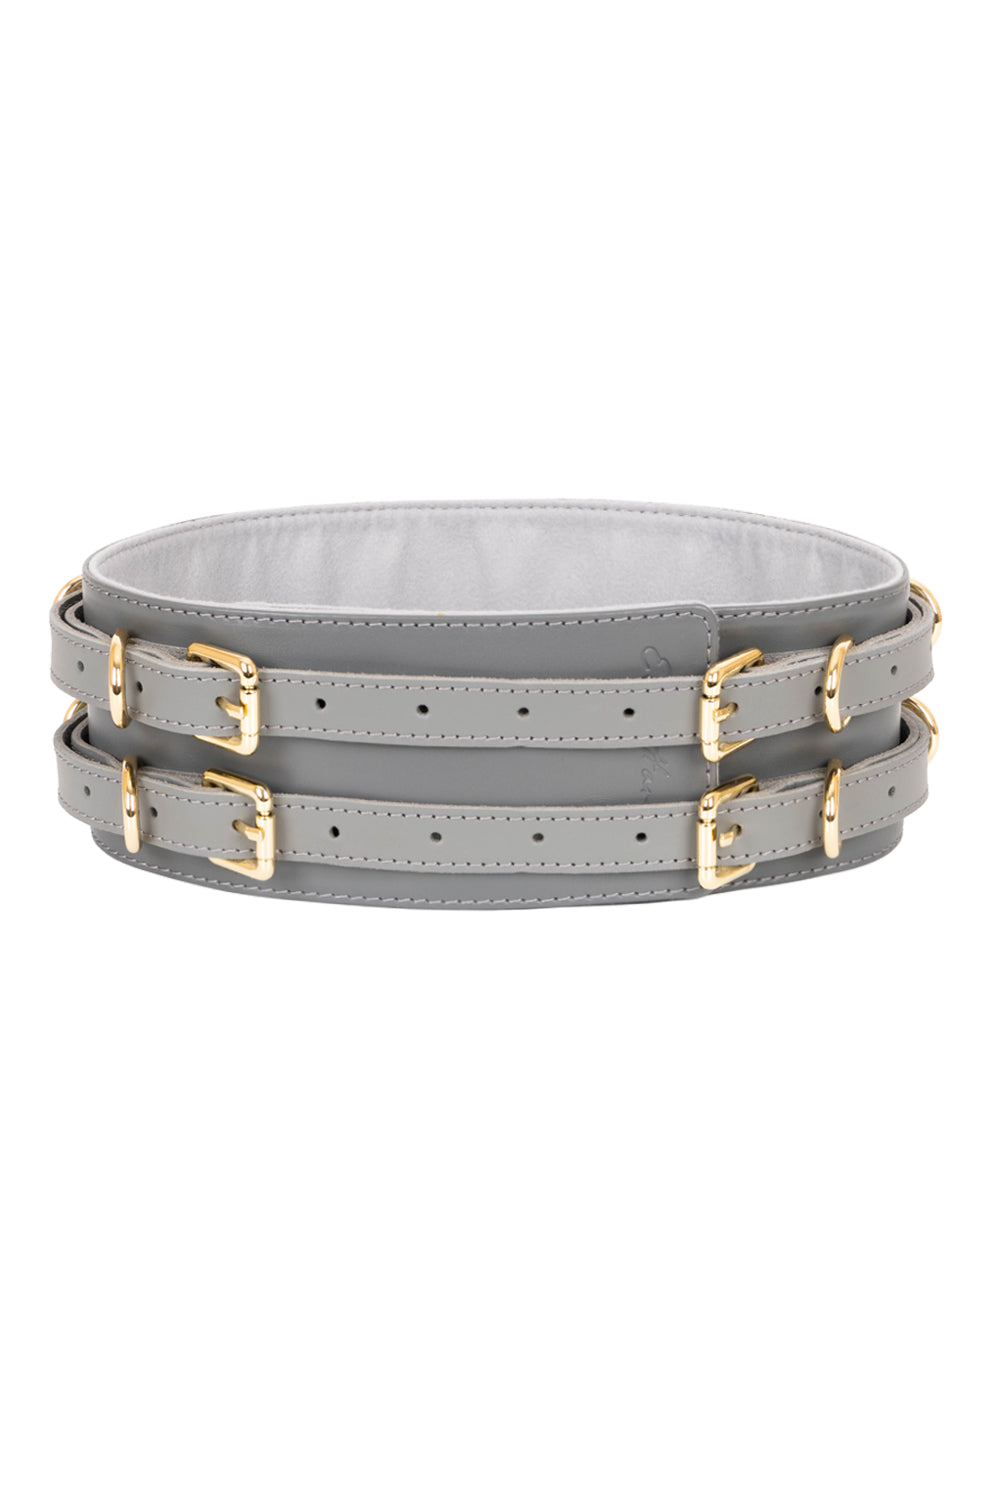 Leather Waist Belt. White